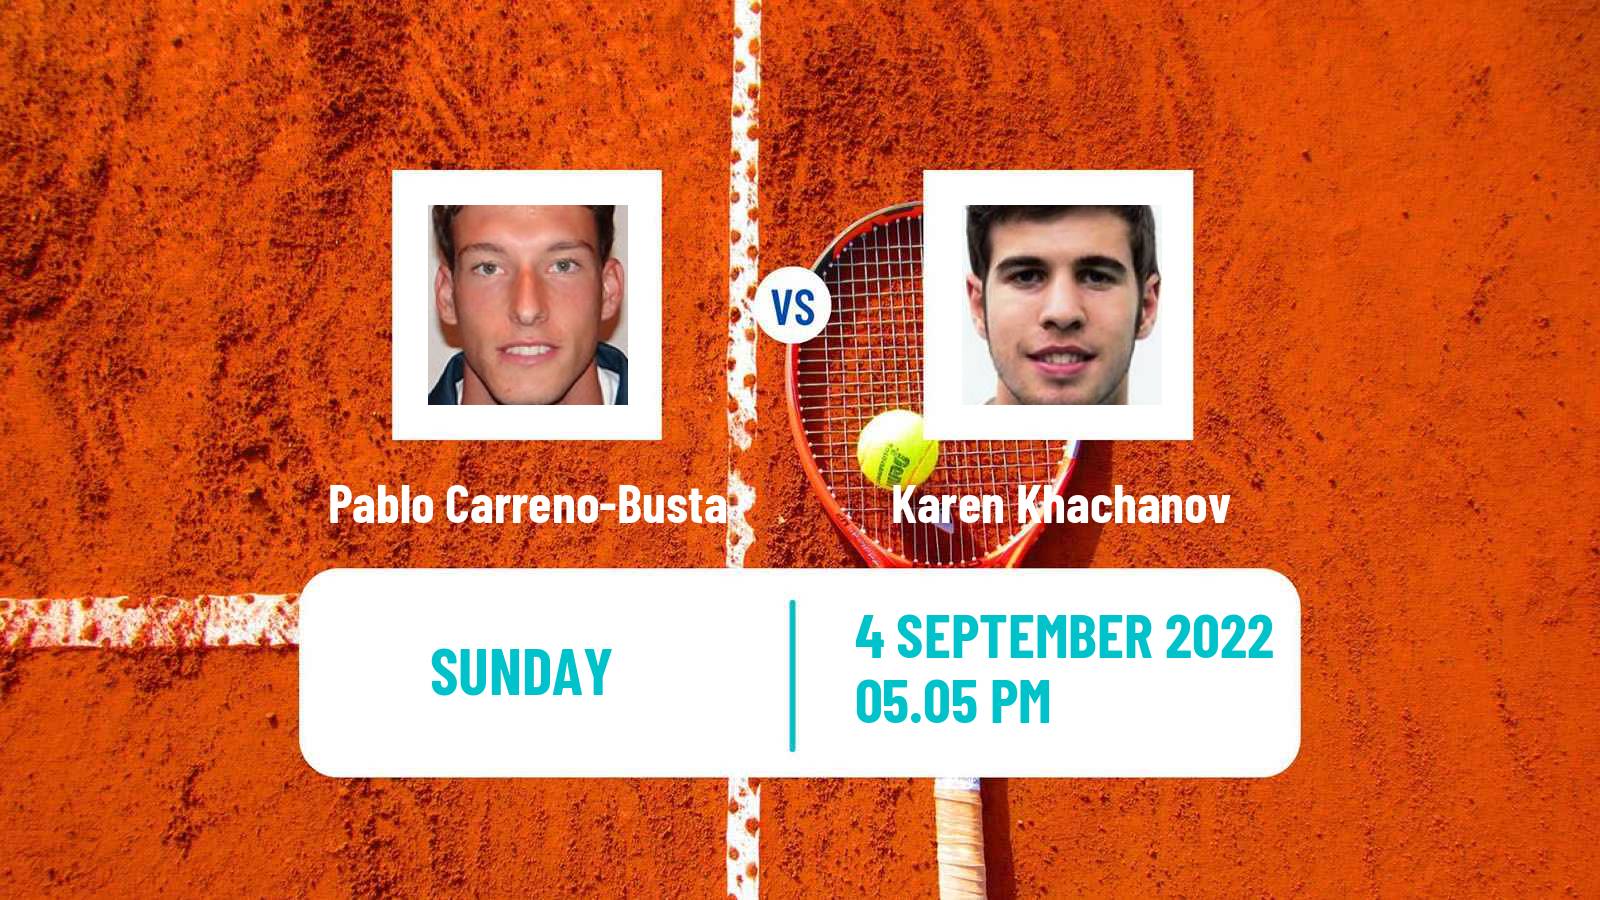 Tennis ATP US Open Pablo Carreno-Busta - Karen Khachanov